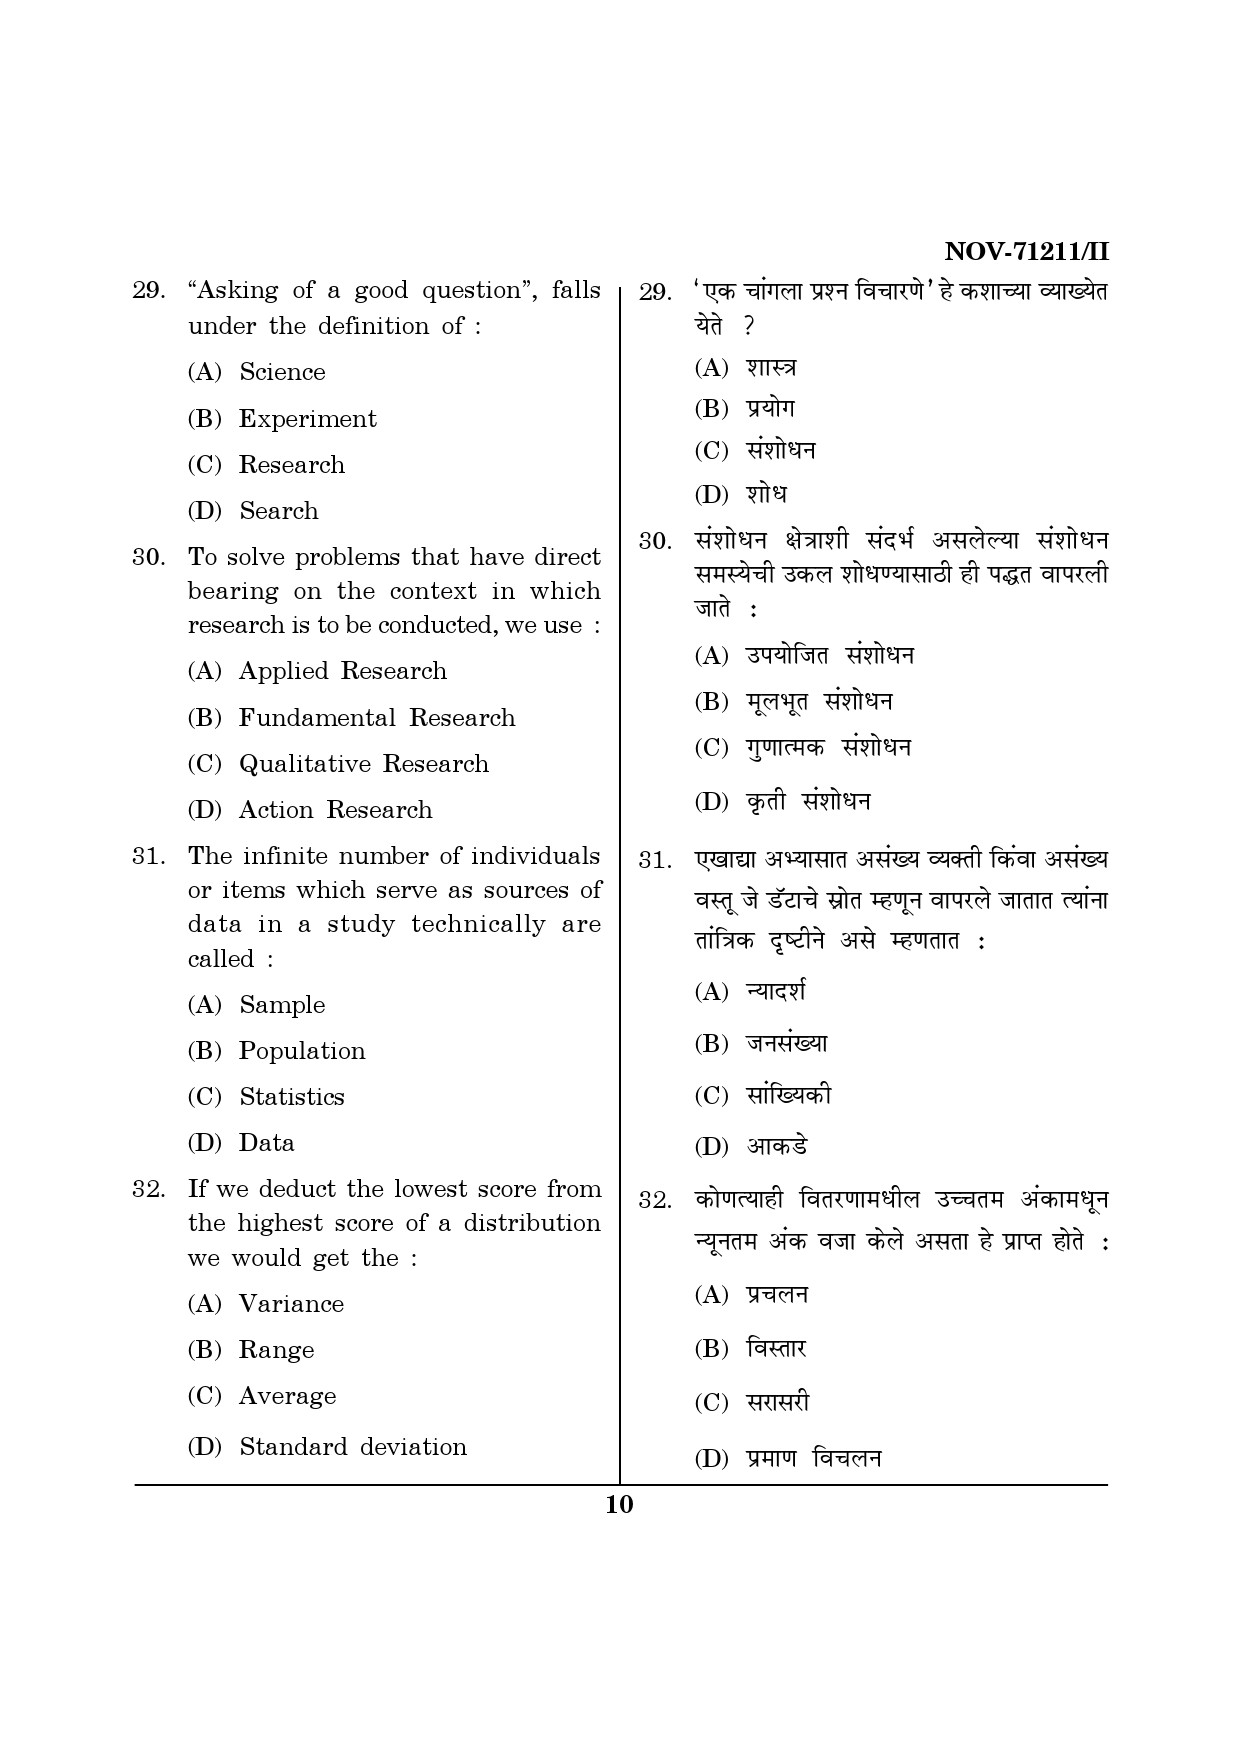 Maharashtra SET Physical Education Question Paper II November 2011 10